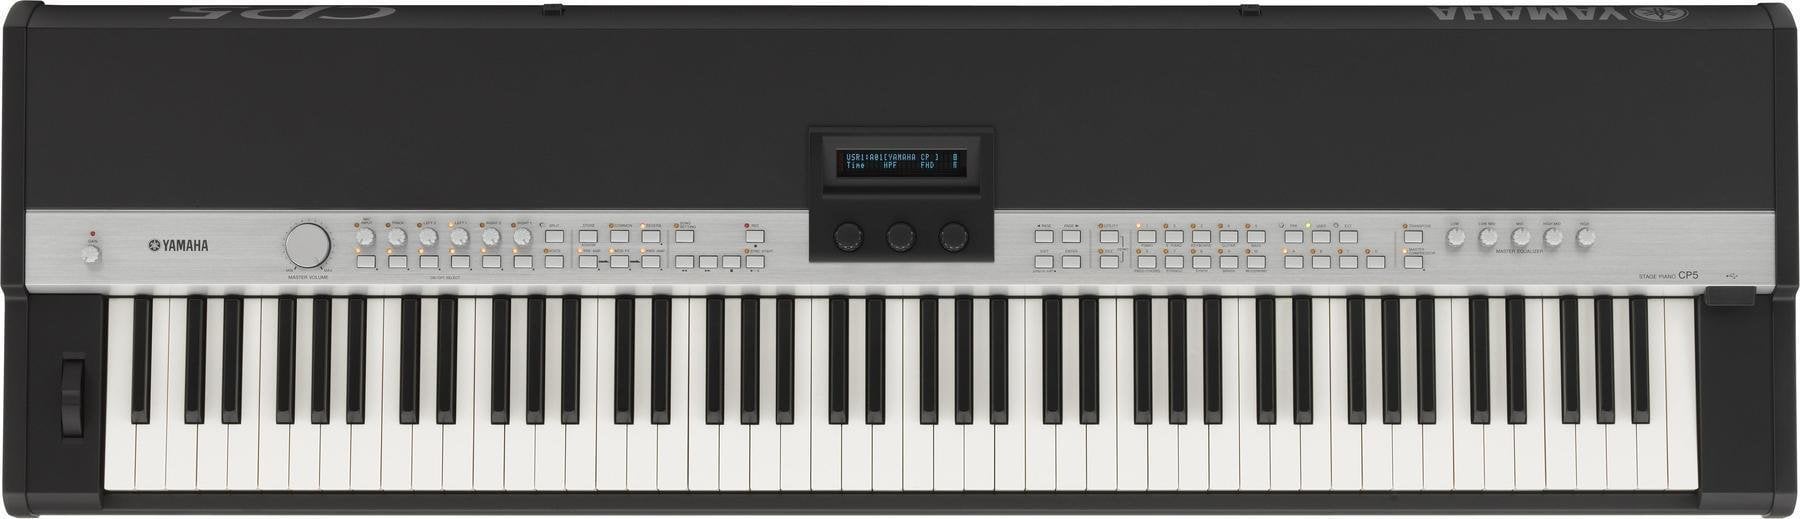 Digital Stage Piano Yamaha CP 5